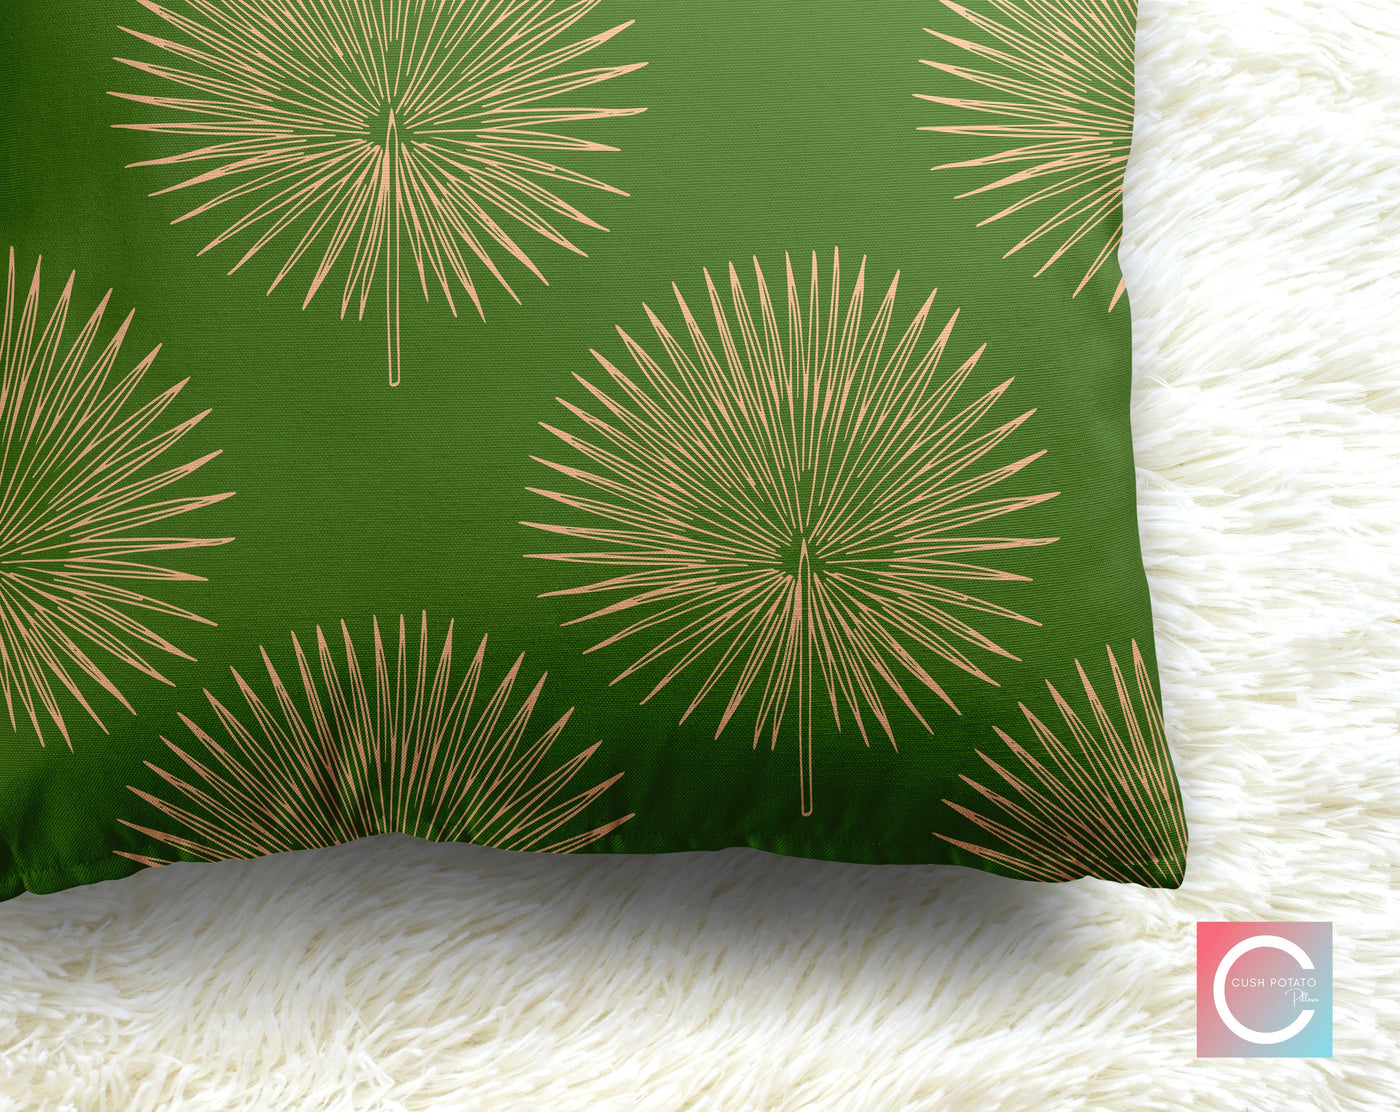 Leafy Palms Olive Green Decorative Pillow Throw Cover - Cush Potato Pillows